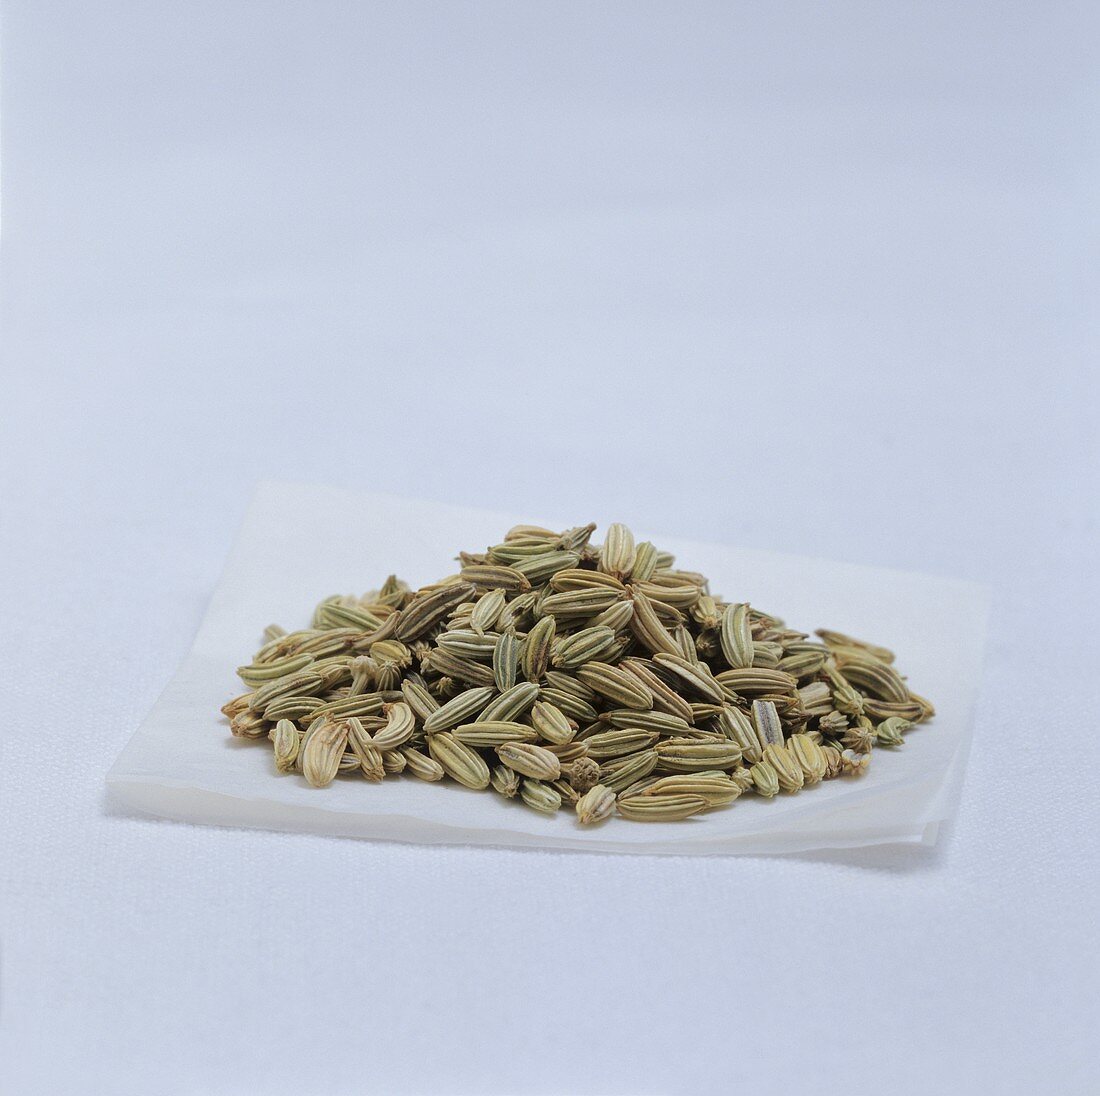 A heap of fennel seeds